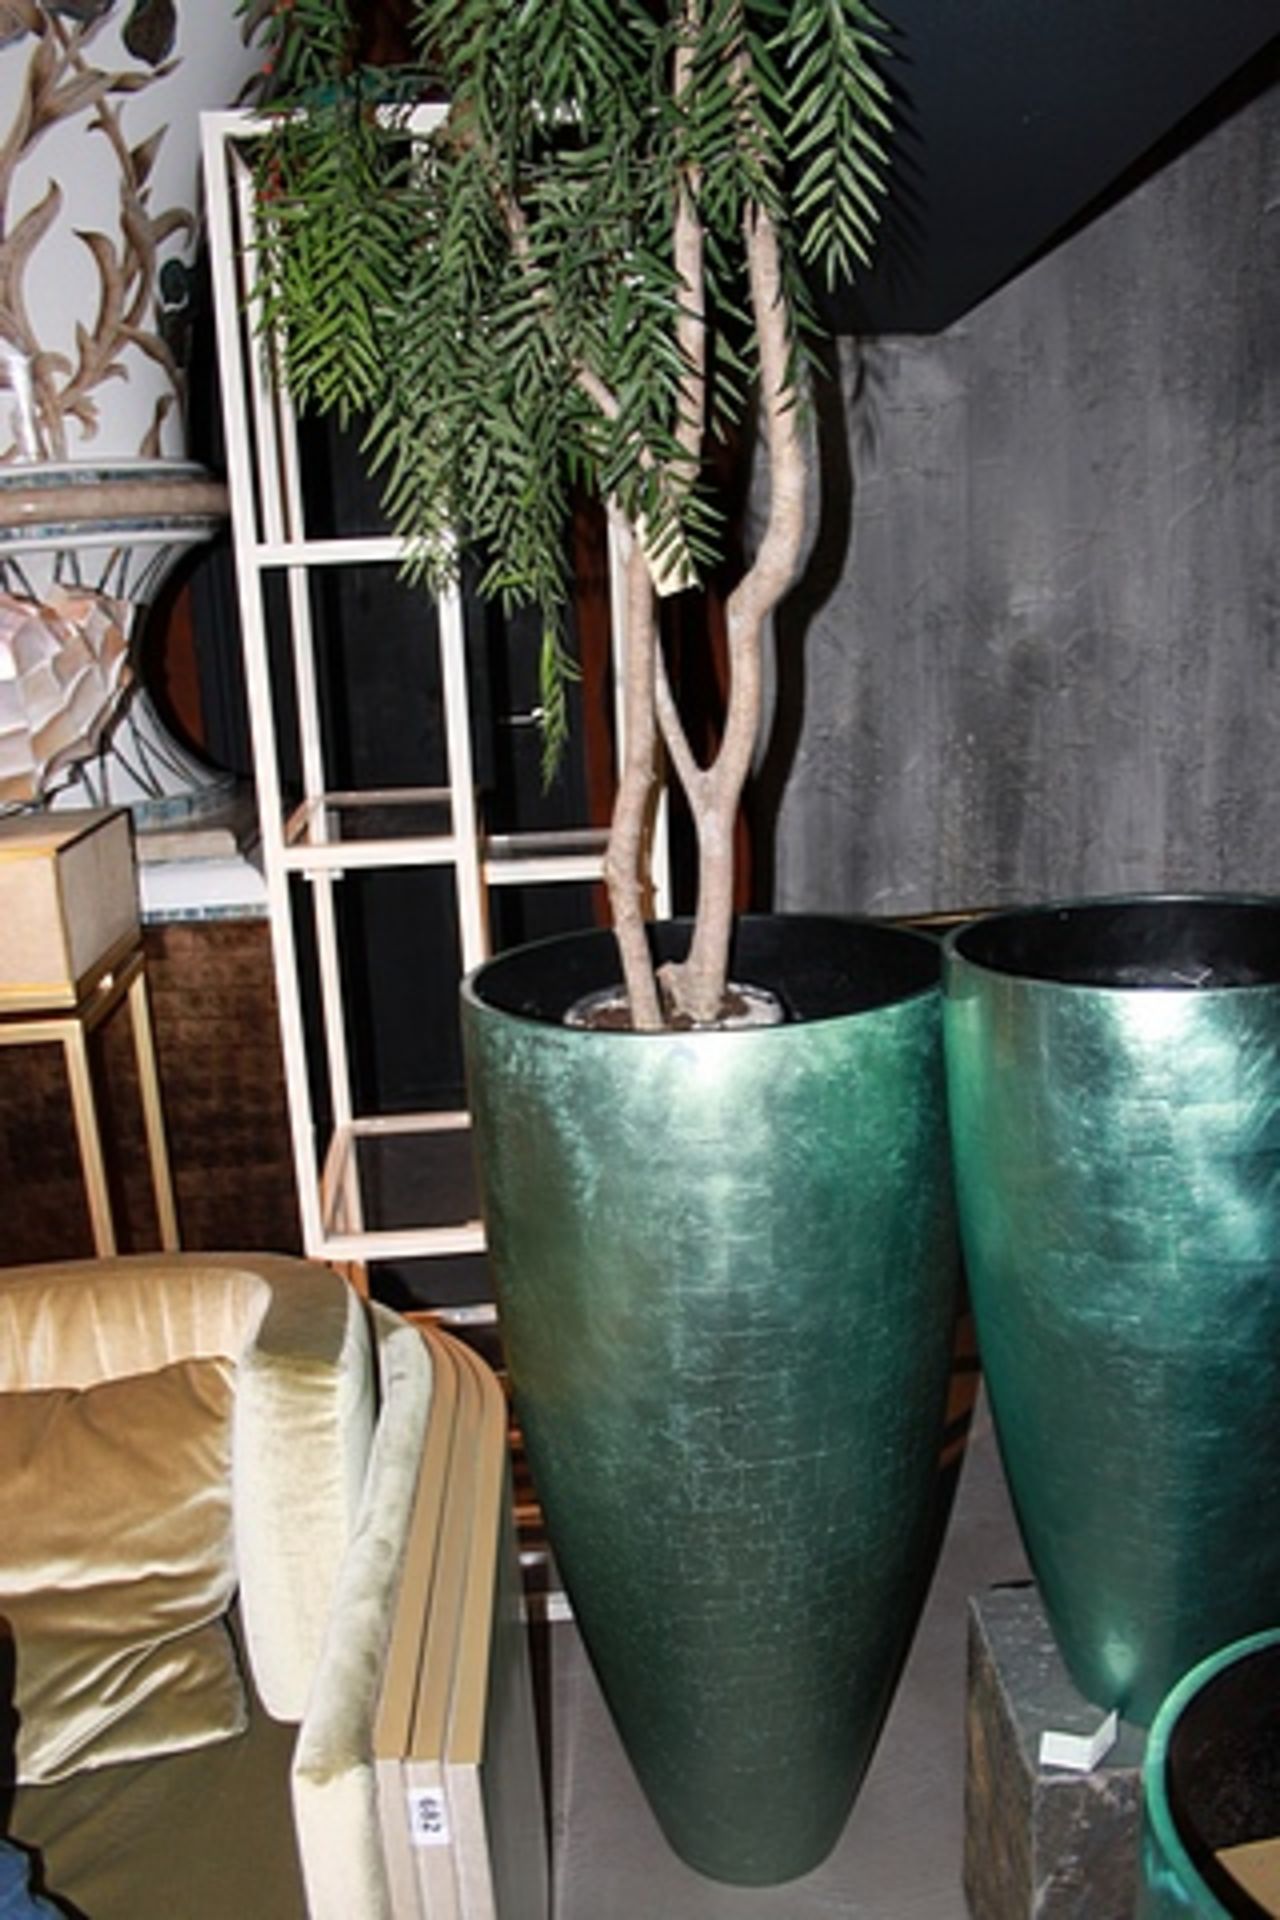 Vase George Large Light Green Light Green Silverleaf. Exquisite luxury teal vase will bring